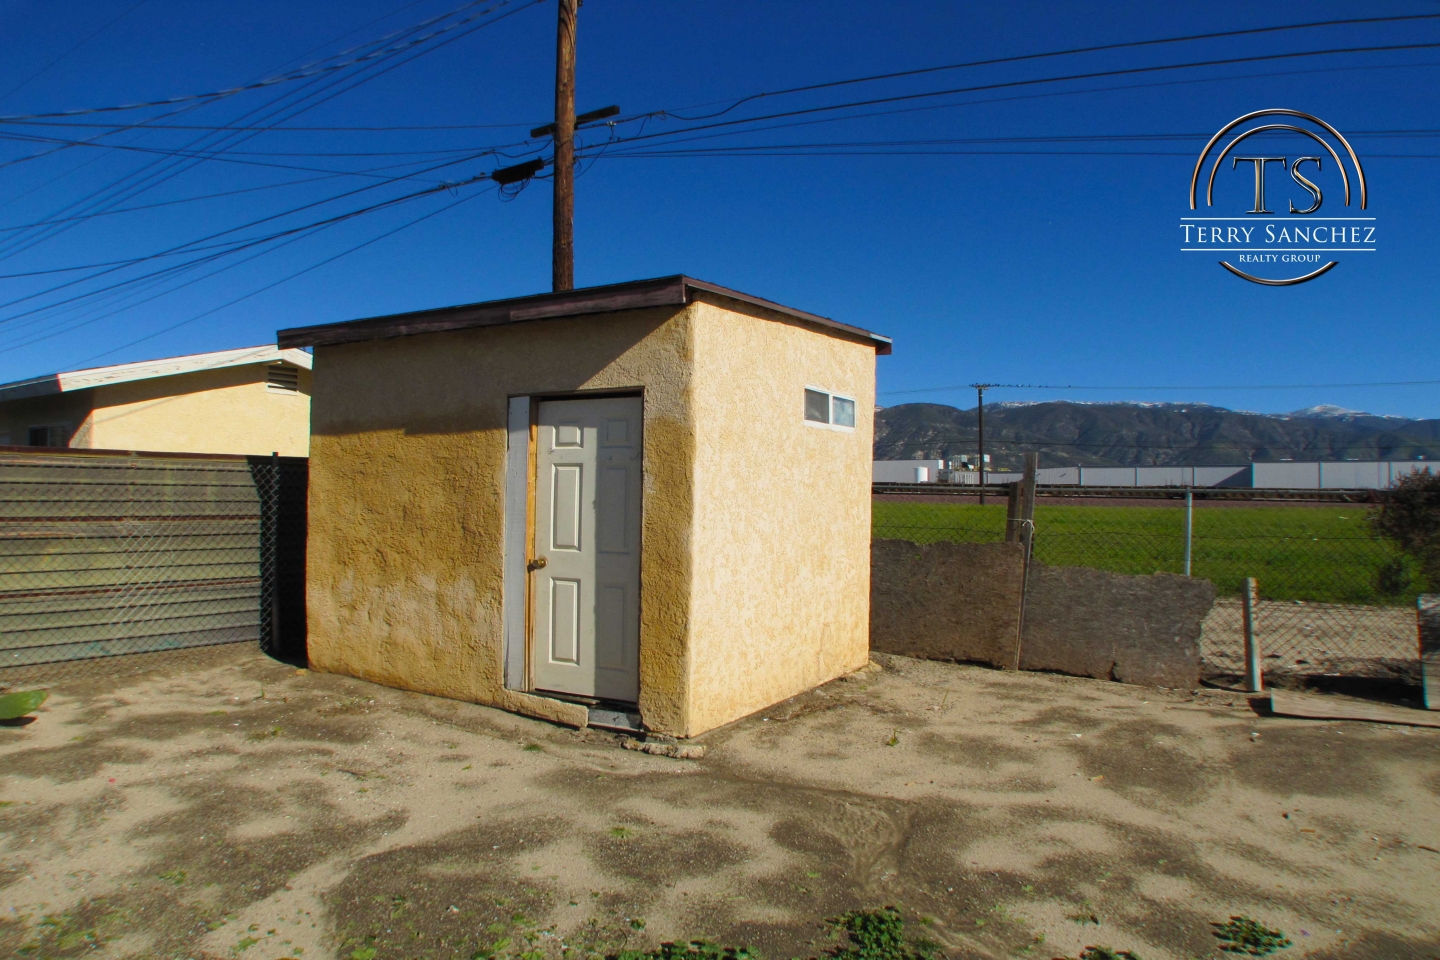 HOME FOR SALE IN SAN BERNARDINO CA 92407 BY REAL ESTATE BROKER TERRY SANCHEZ $260,000 WITH 4 BEDROOMS 2 BATHROOMS